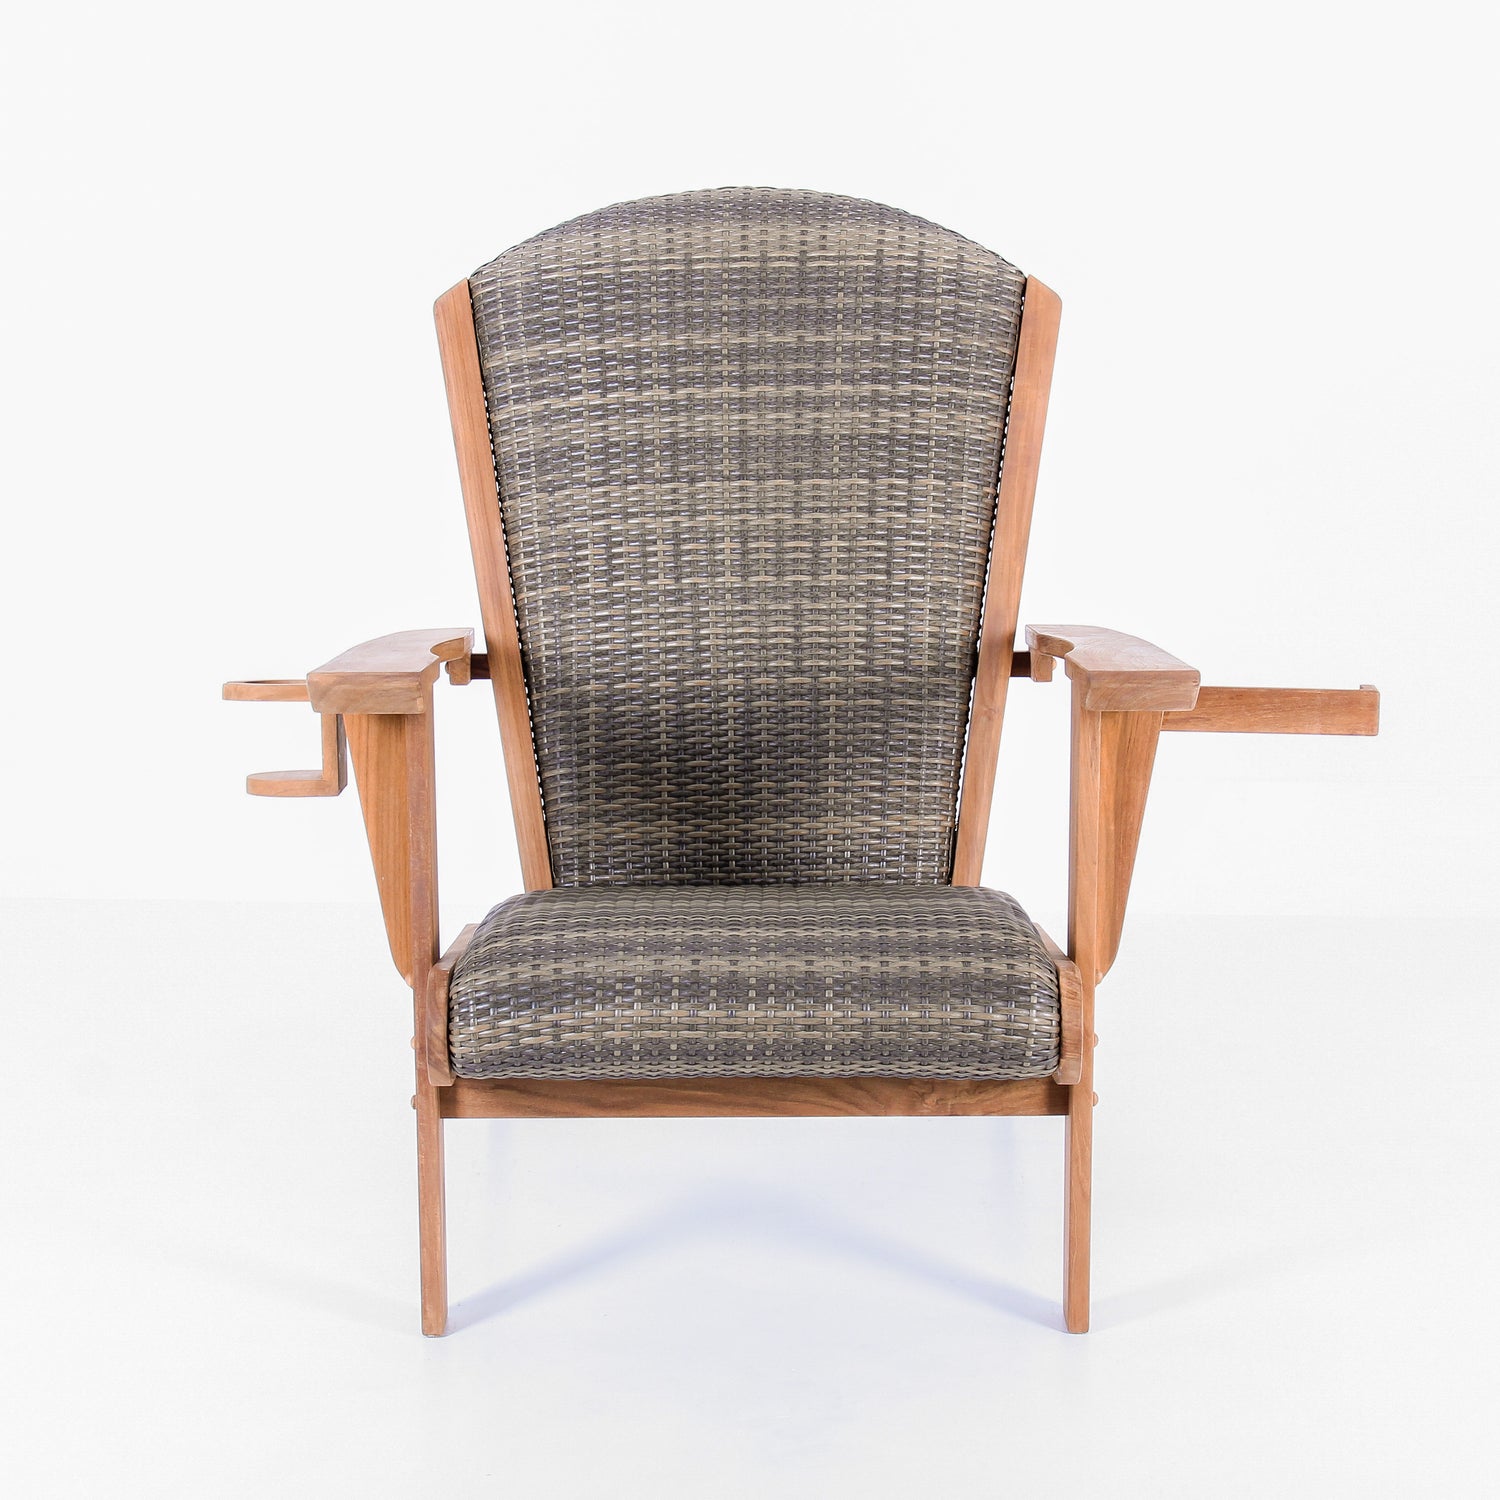 Auburn Upholstered Teak Outdoor Adirondack Chair - Cambridge Casual